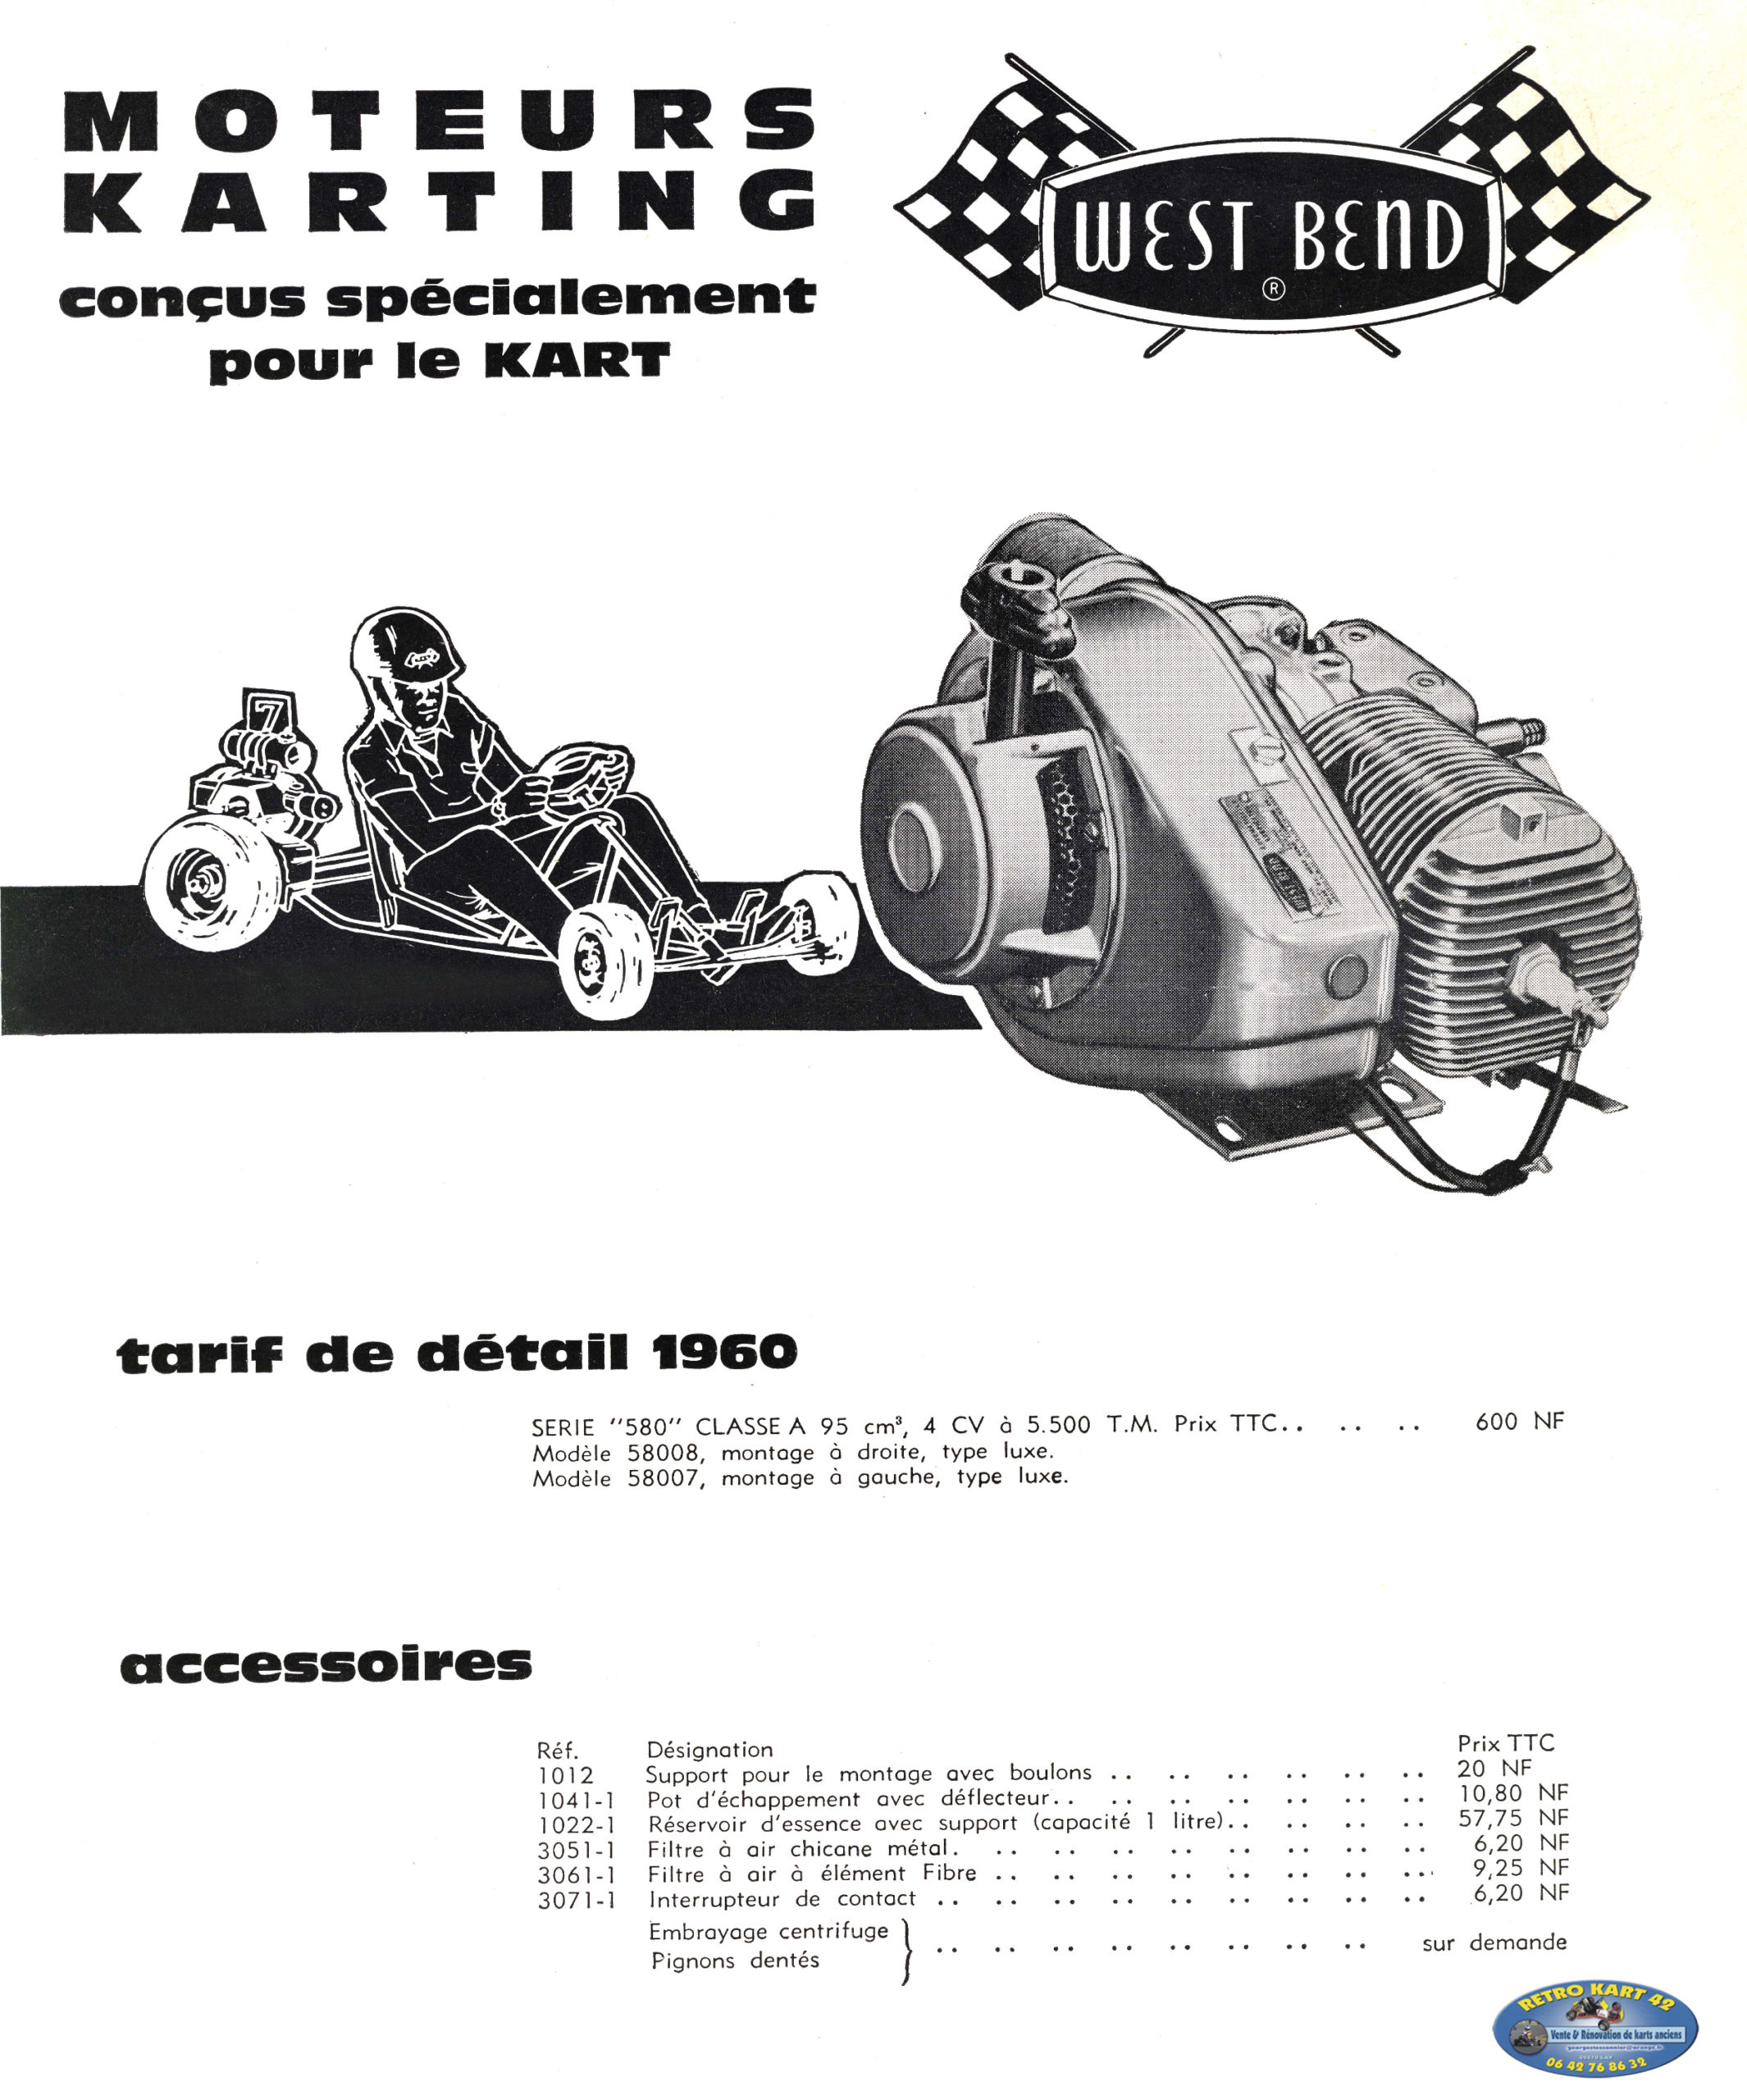 moteur, west bend, 1960, bi-vap, zurcher, mono-vap, saetta, rush-kart, prado-marlotte, robro-marlotte